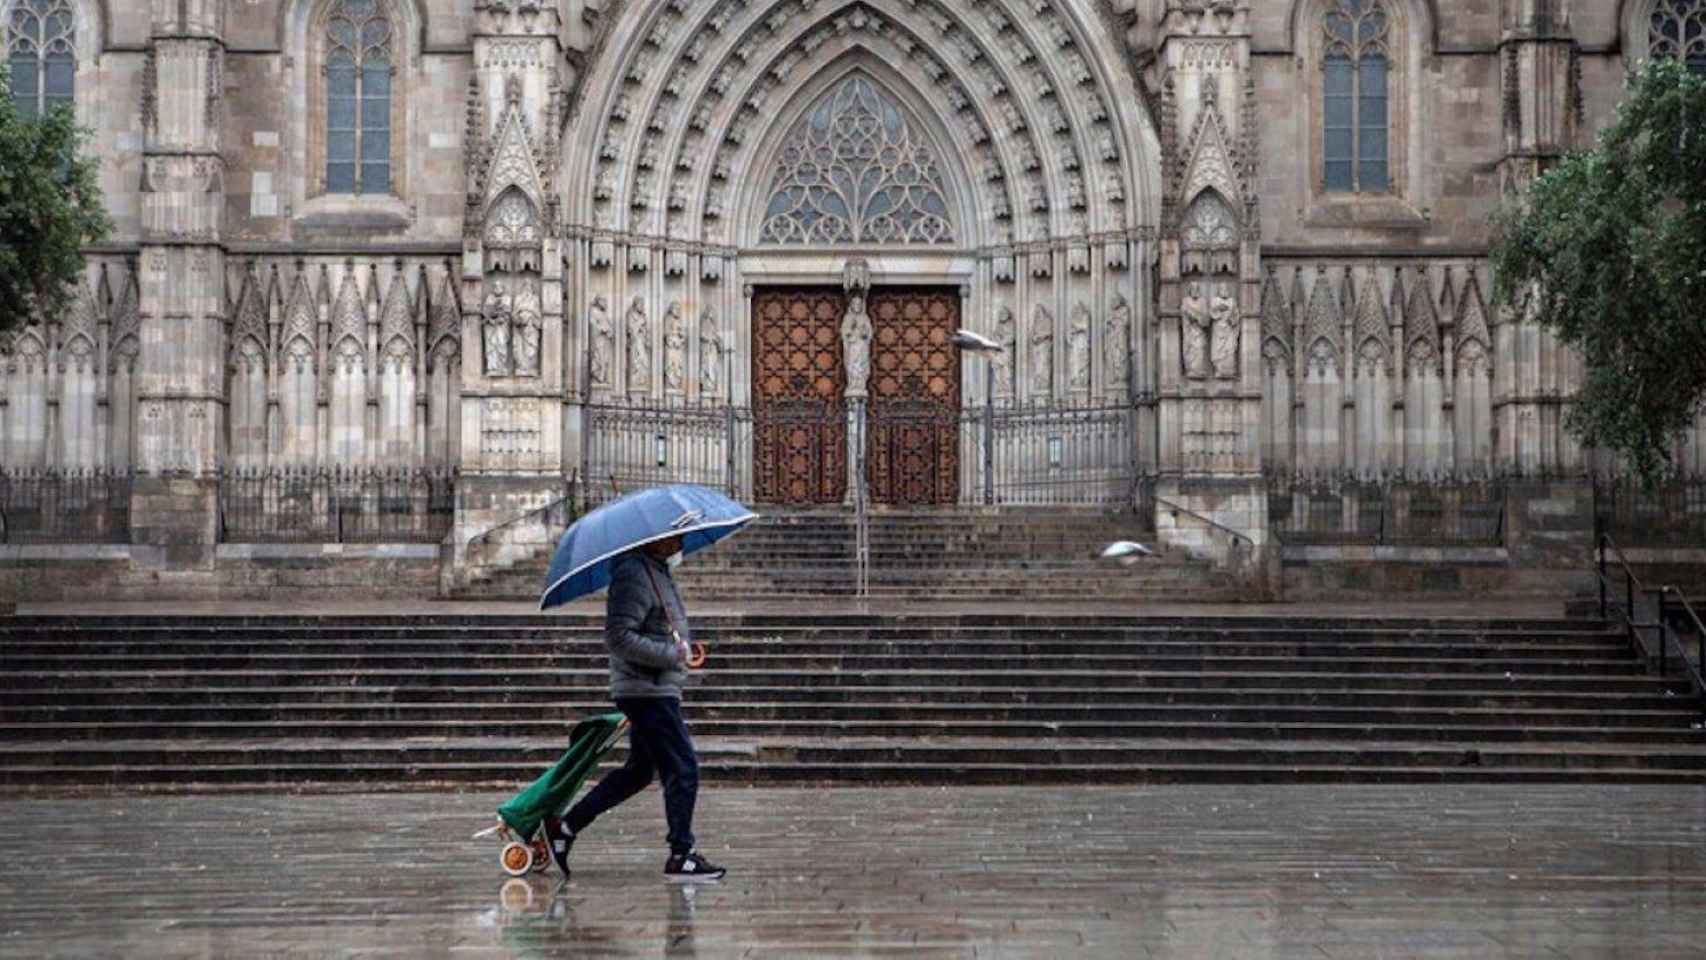 La Plaza de la Catedral de Barcelona durante una jornada de lluvia